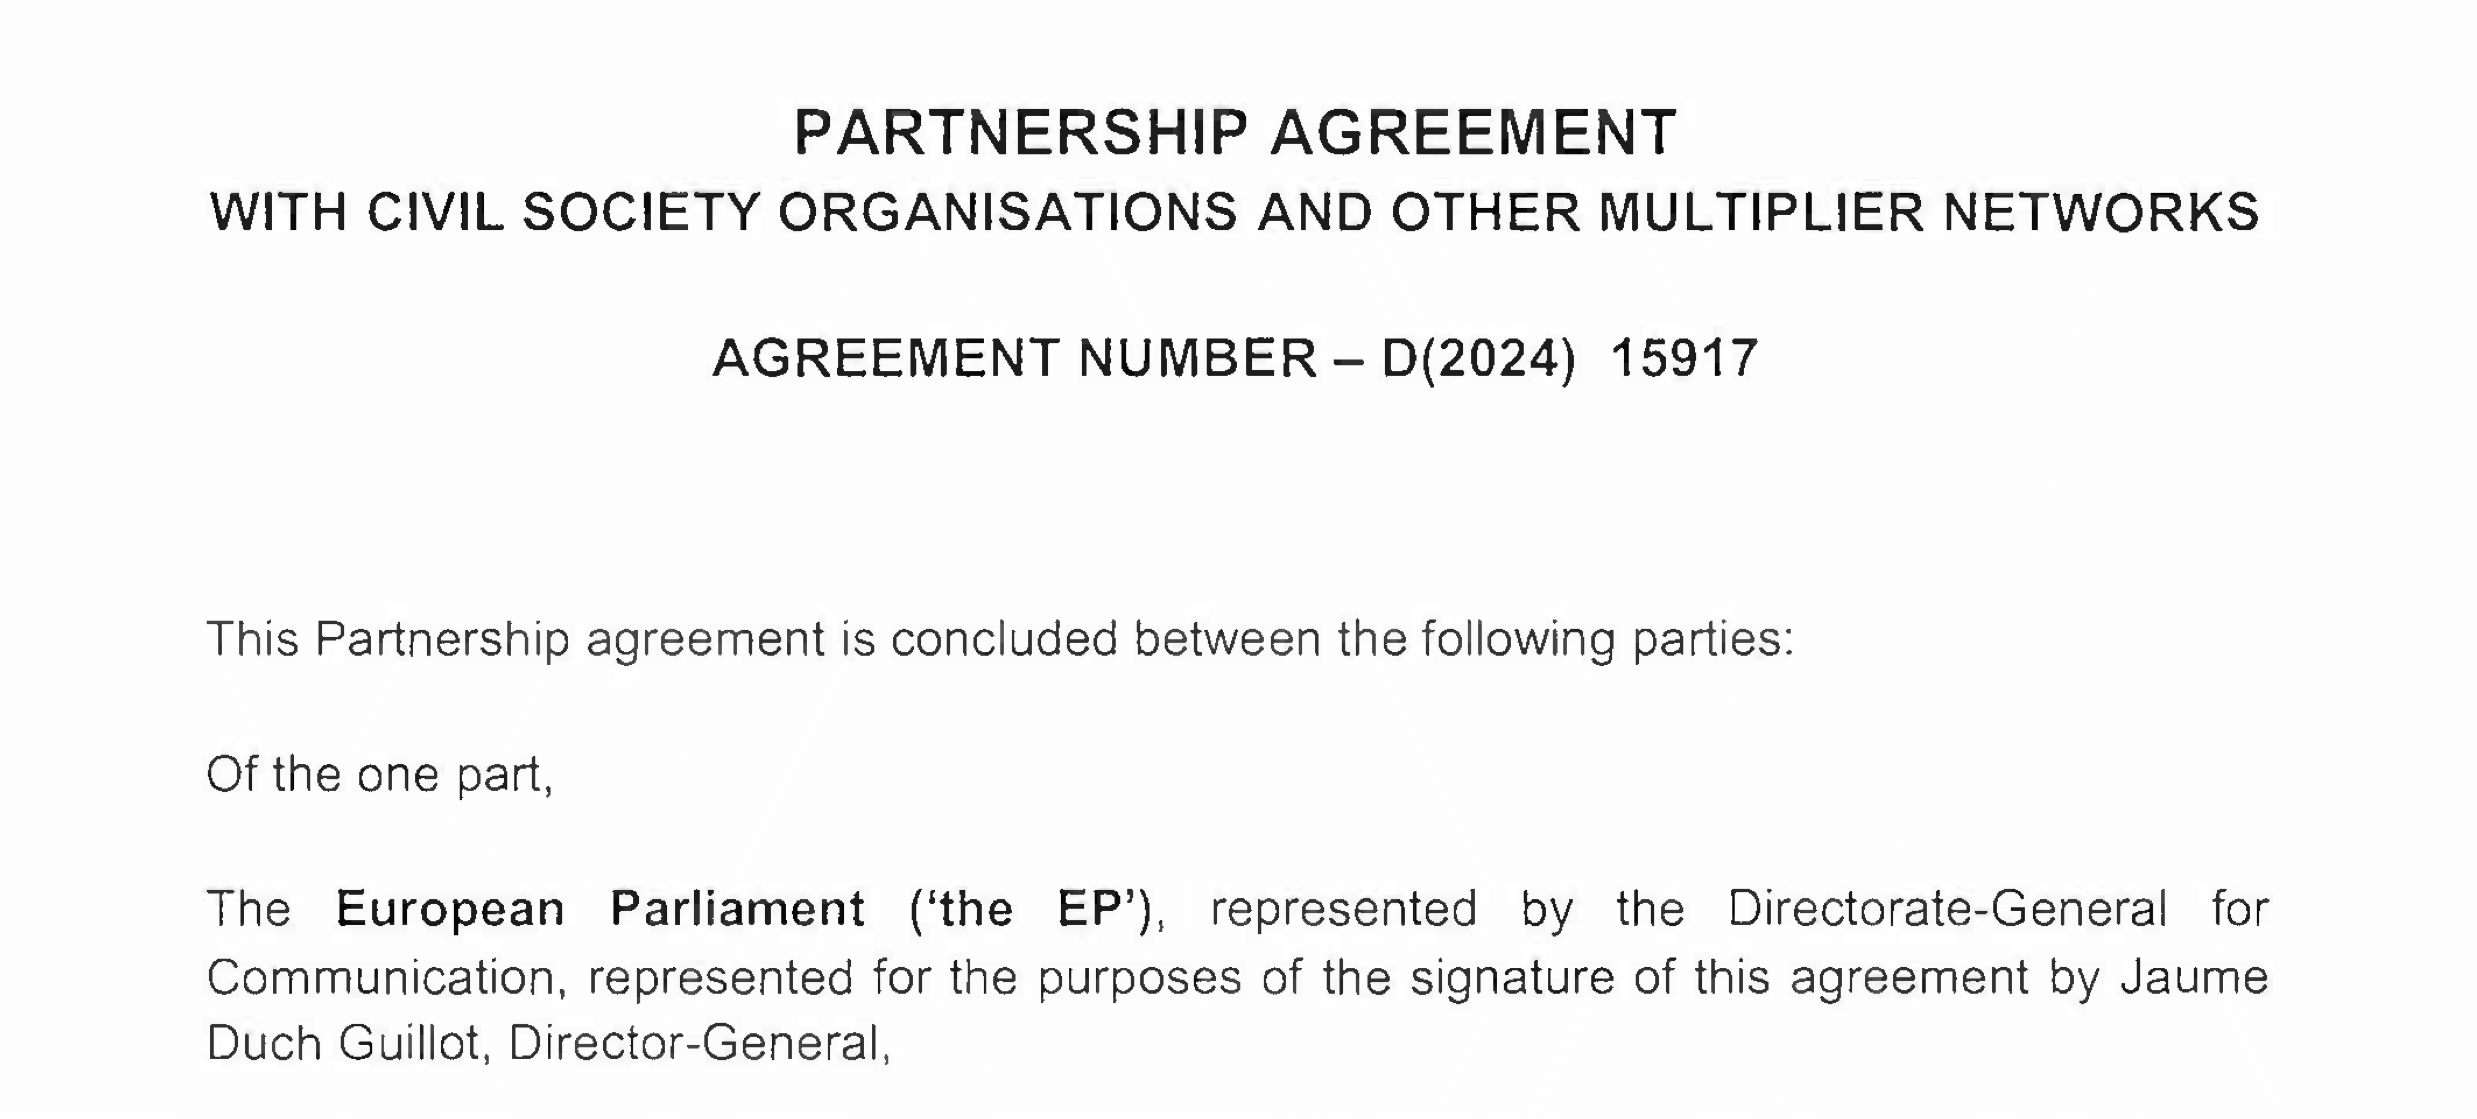 EU Parliament Partnership Agreement - Official Communication Partner